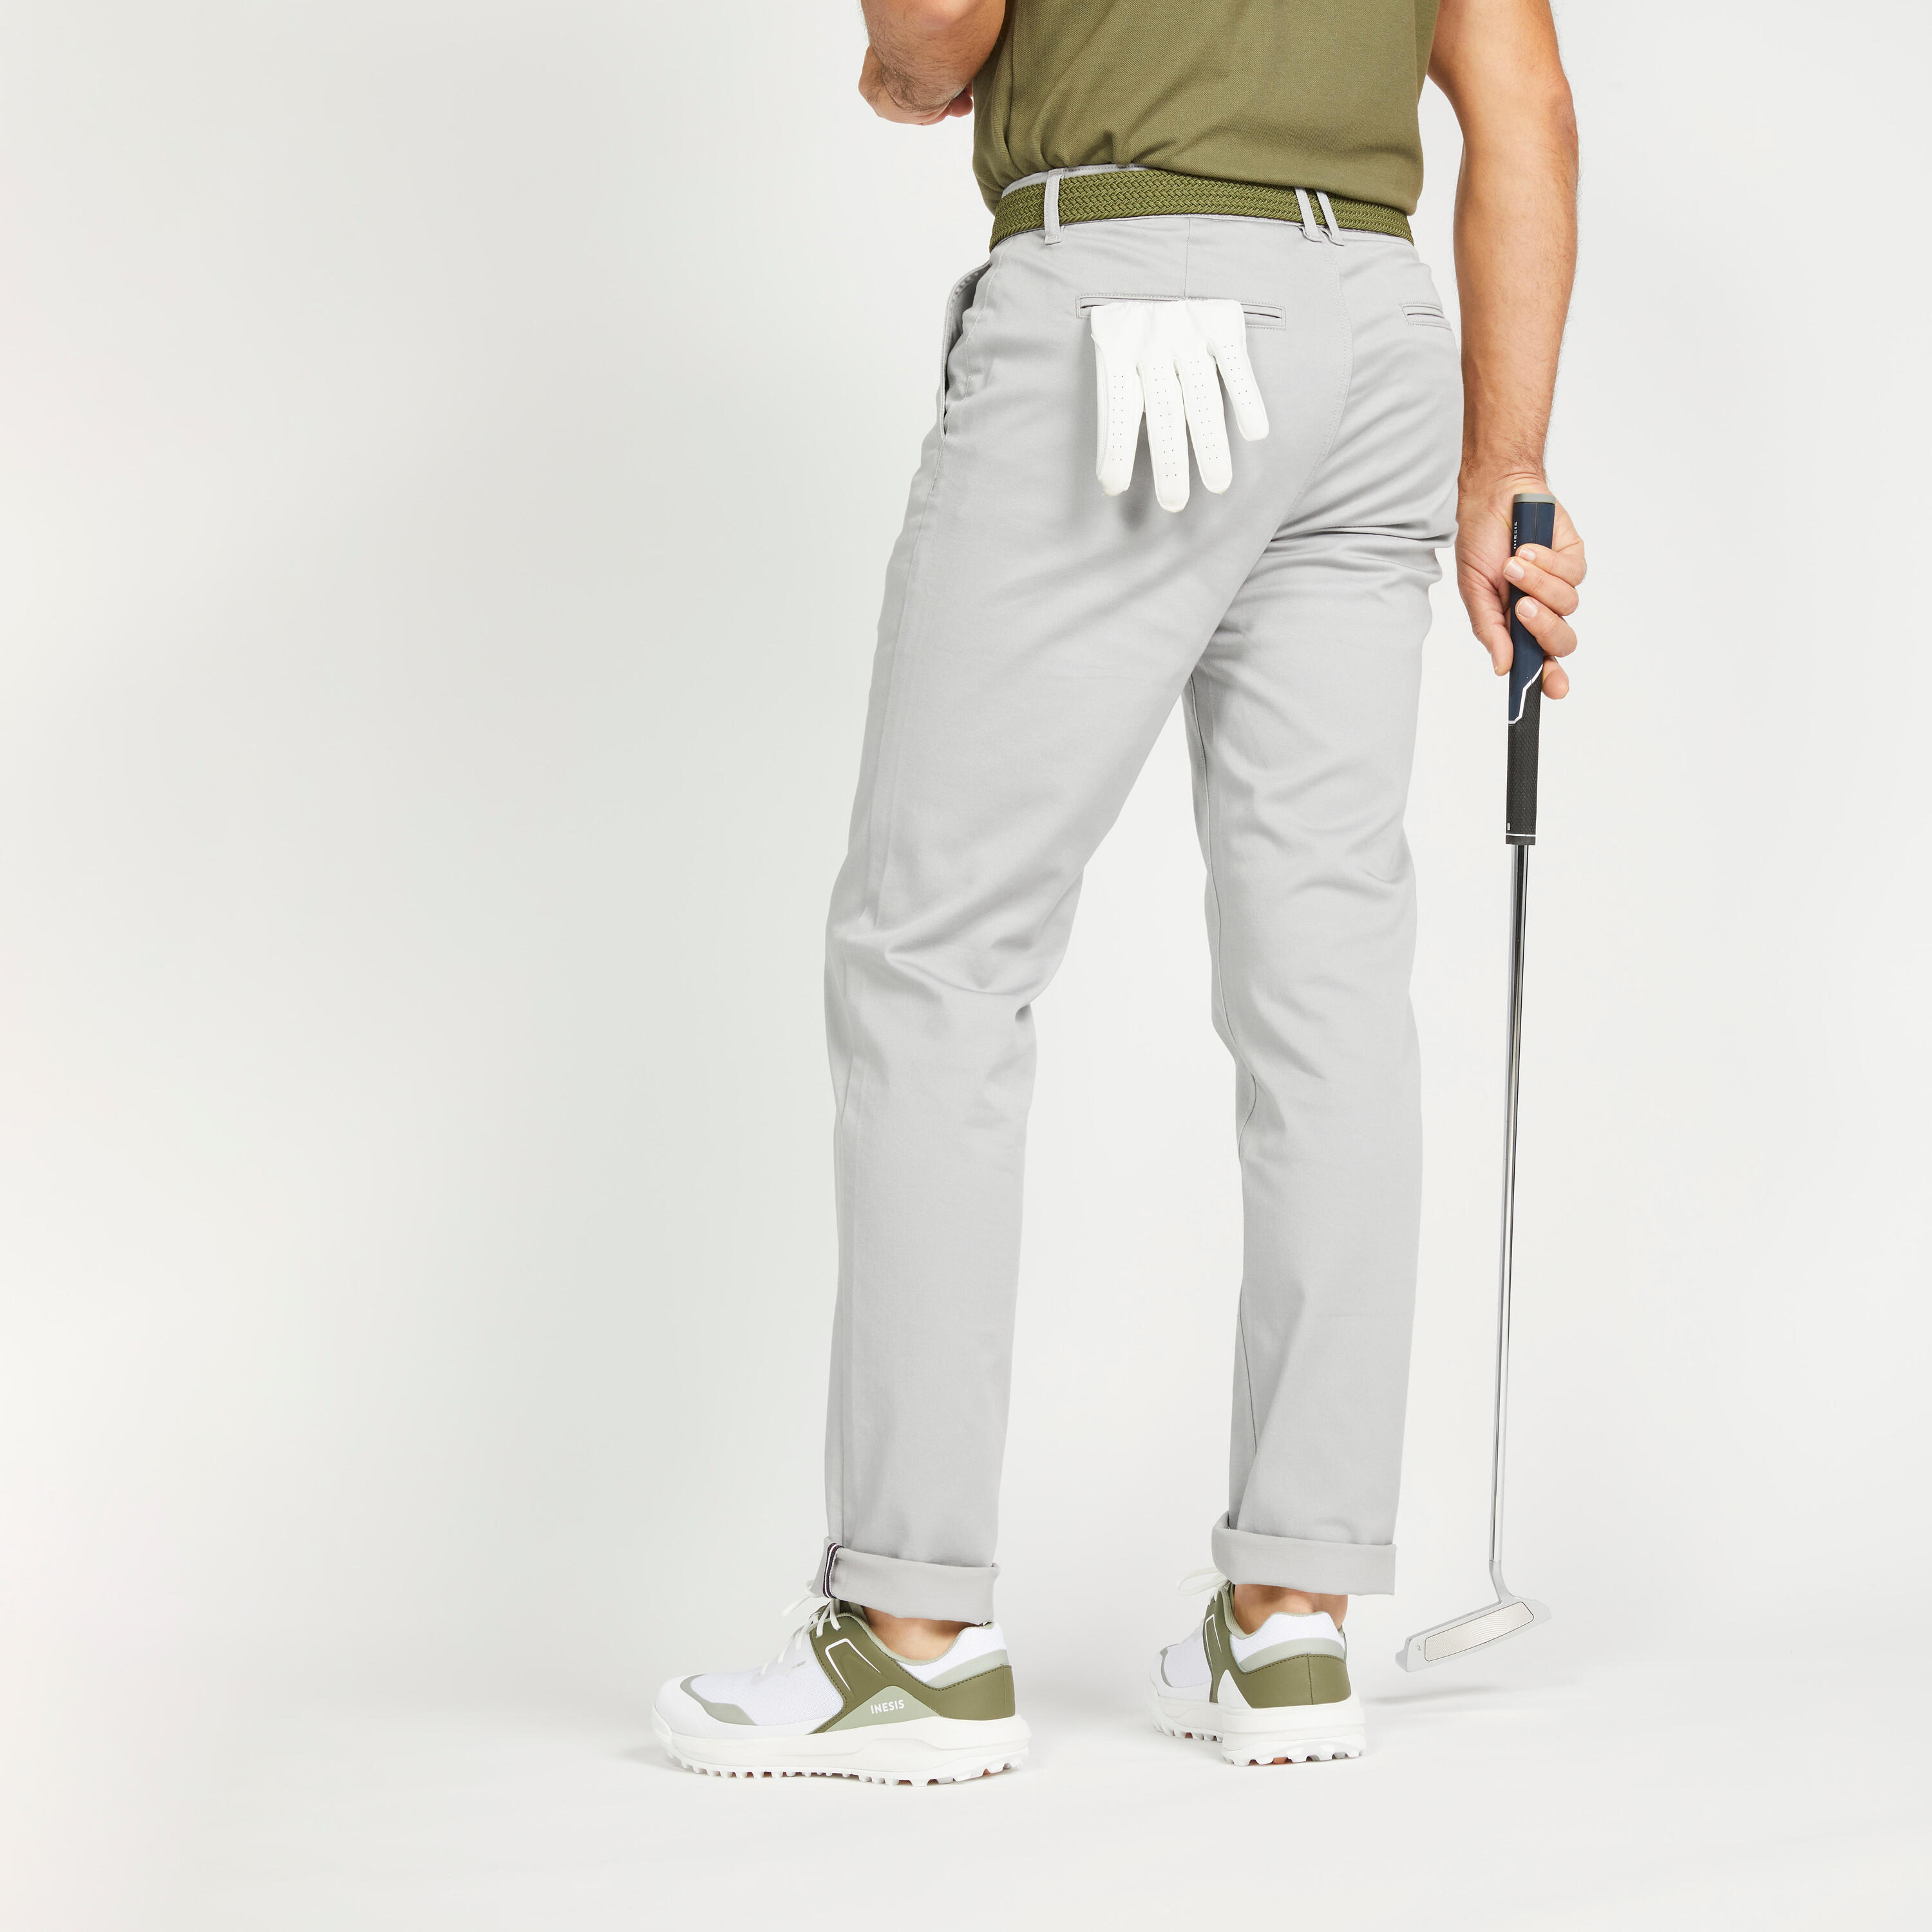 Men's golf trousers - MW500 grey 2/6